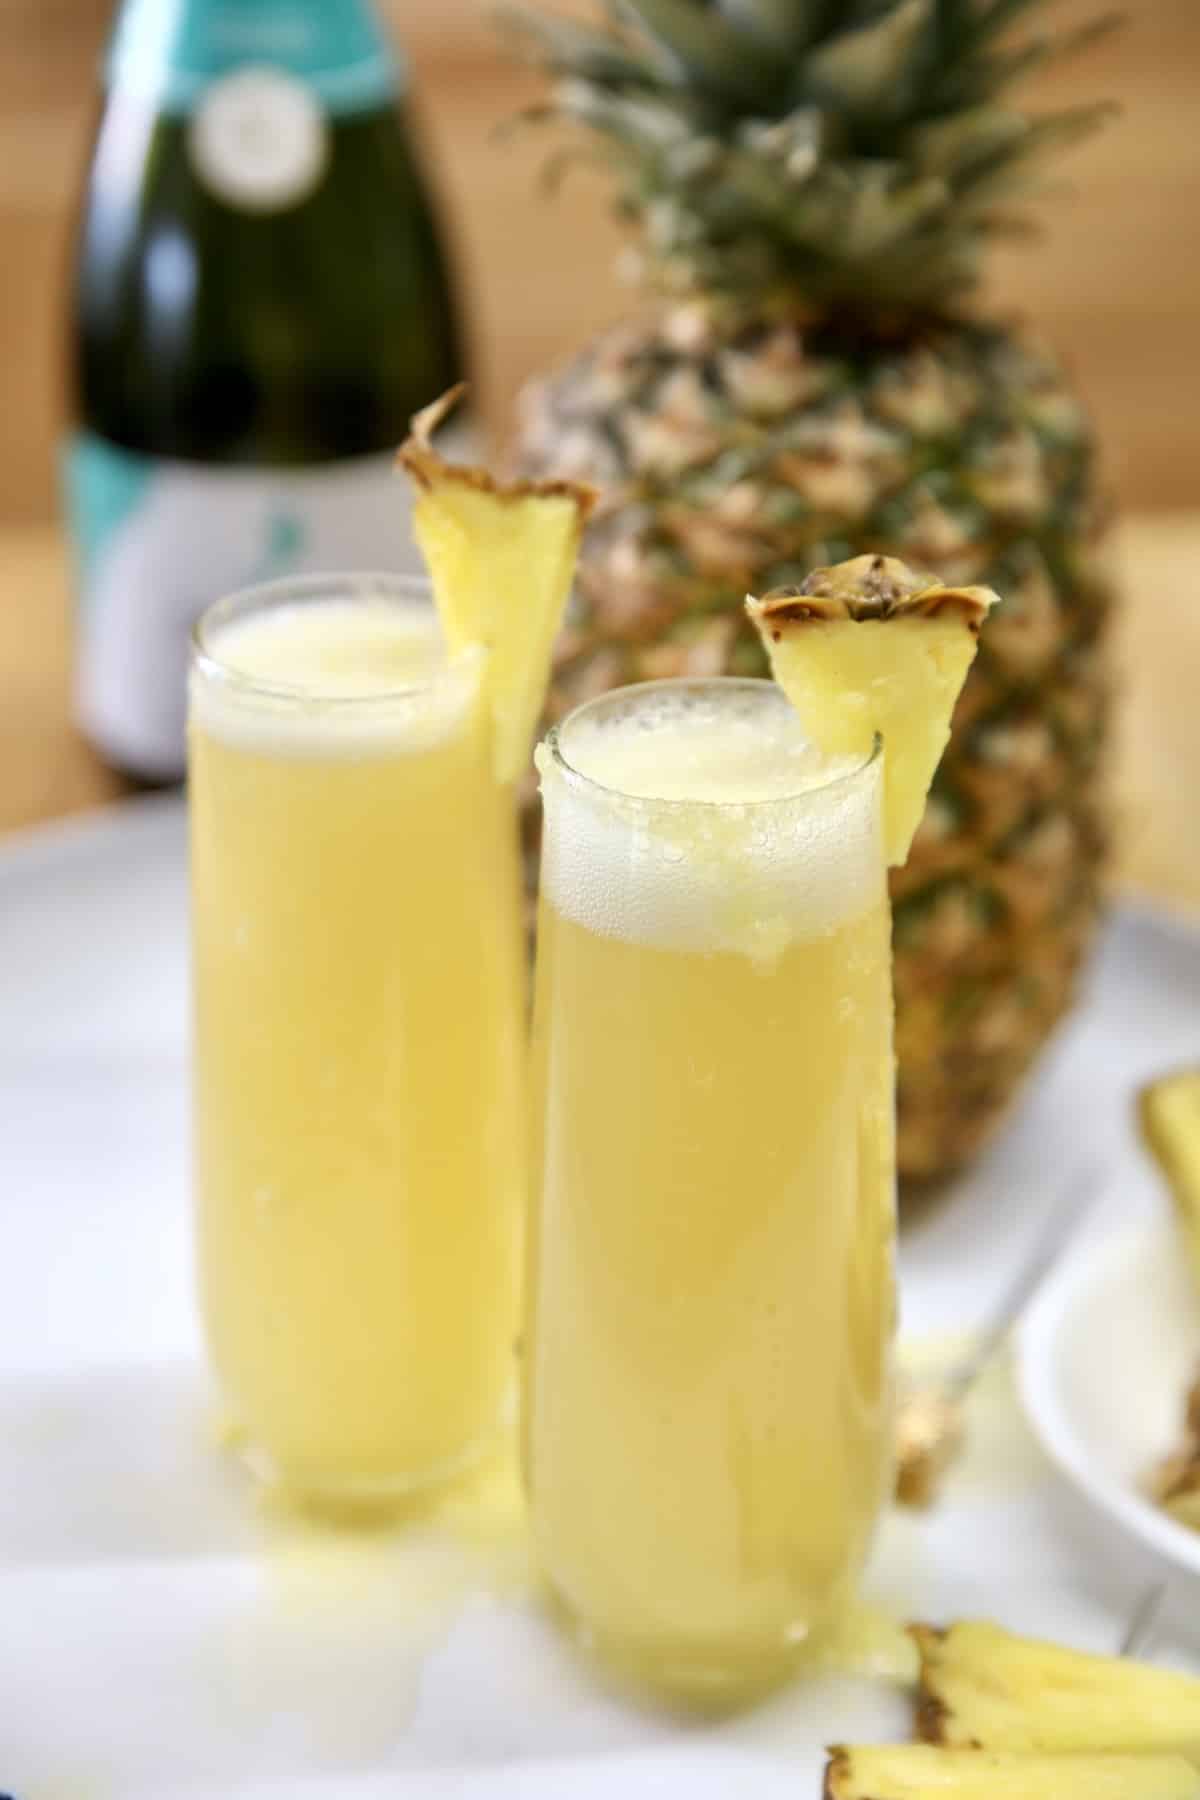 https://www.missinthekitchen.com/wp-content/uploads/2016/05/Pineapple-Mimosa-Cocktail-Image.jpg